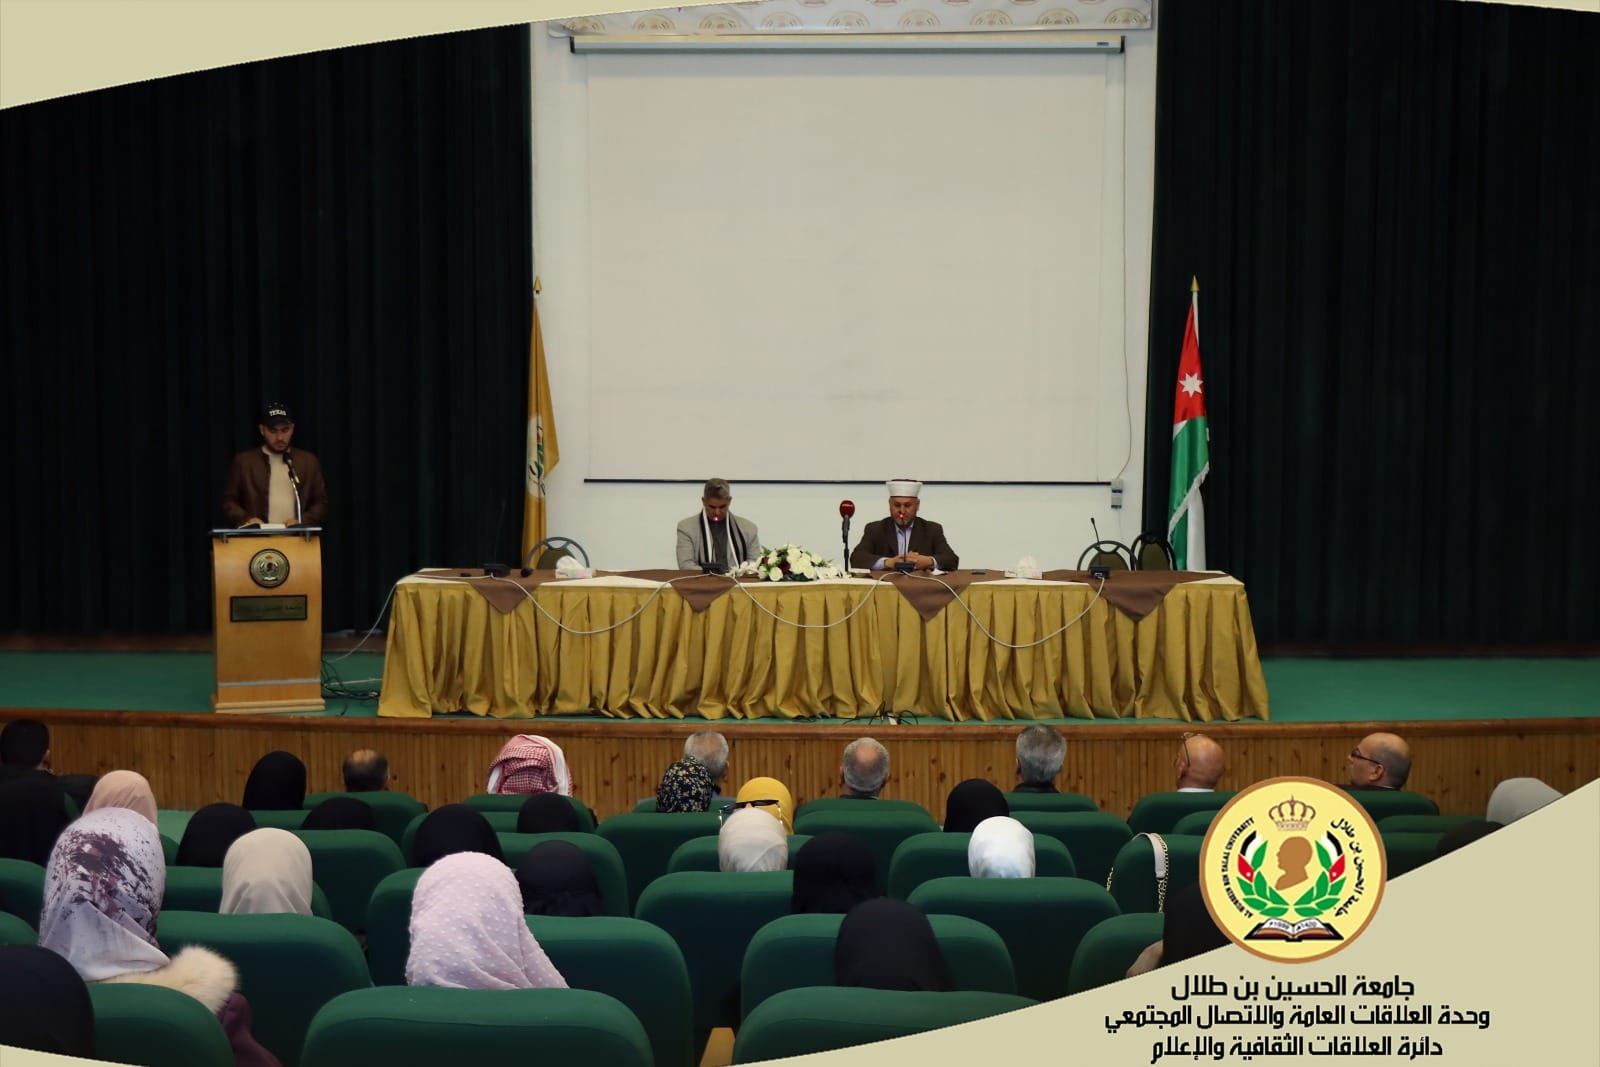 The launch of the “Ramadan Councils” activities at Al Hussein Bin Talal University